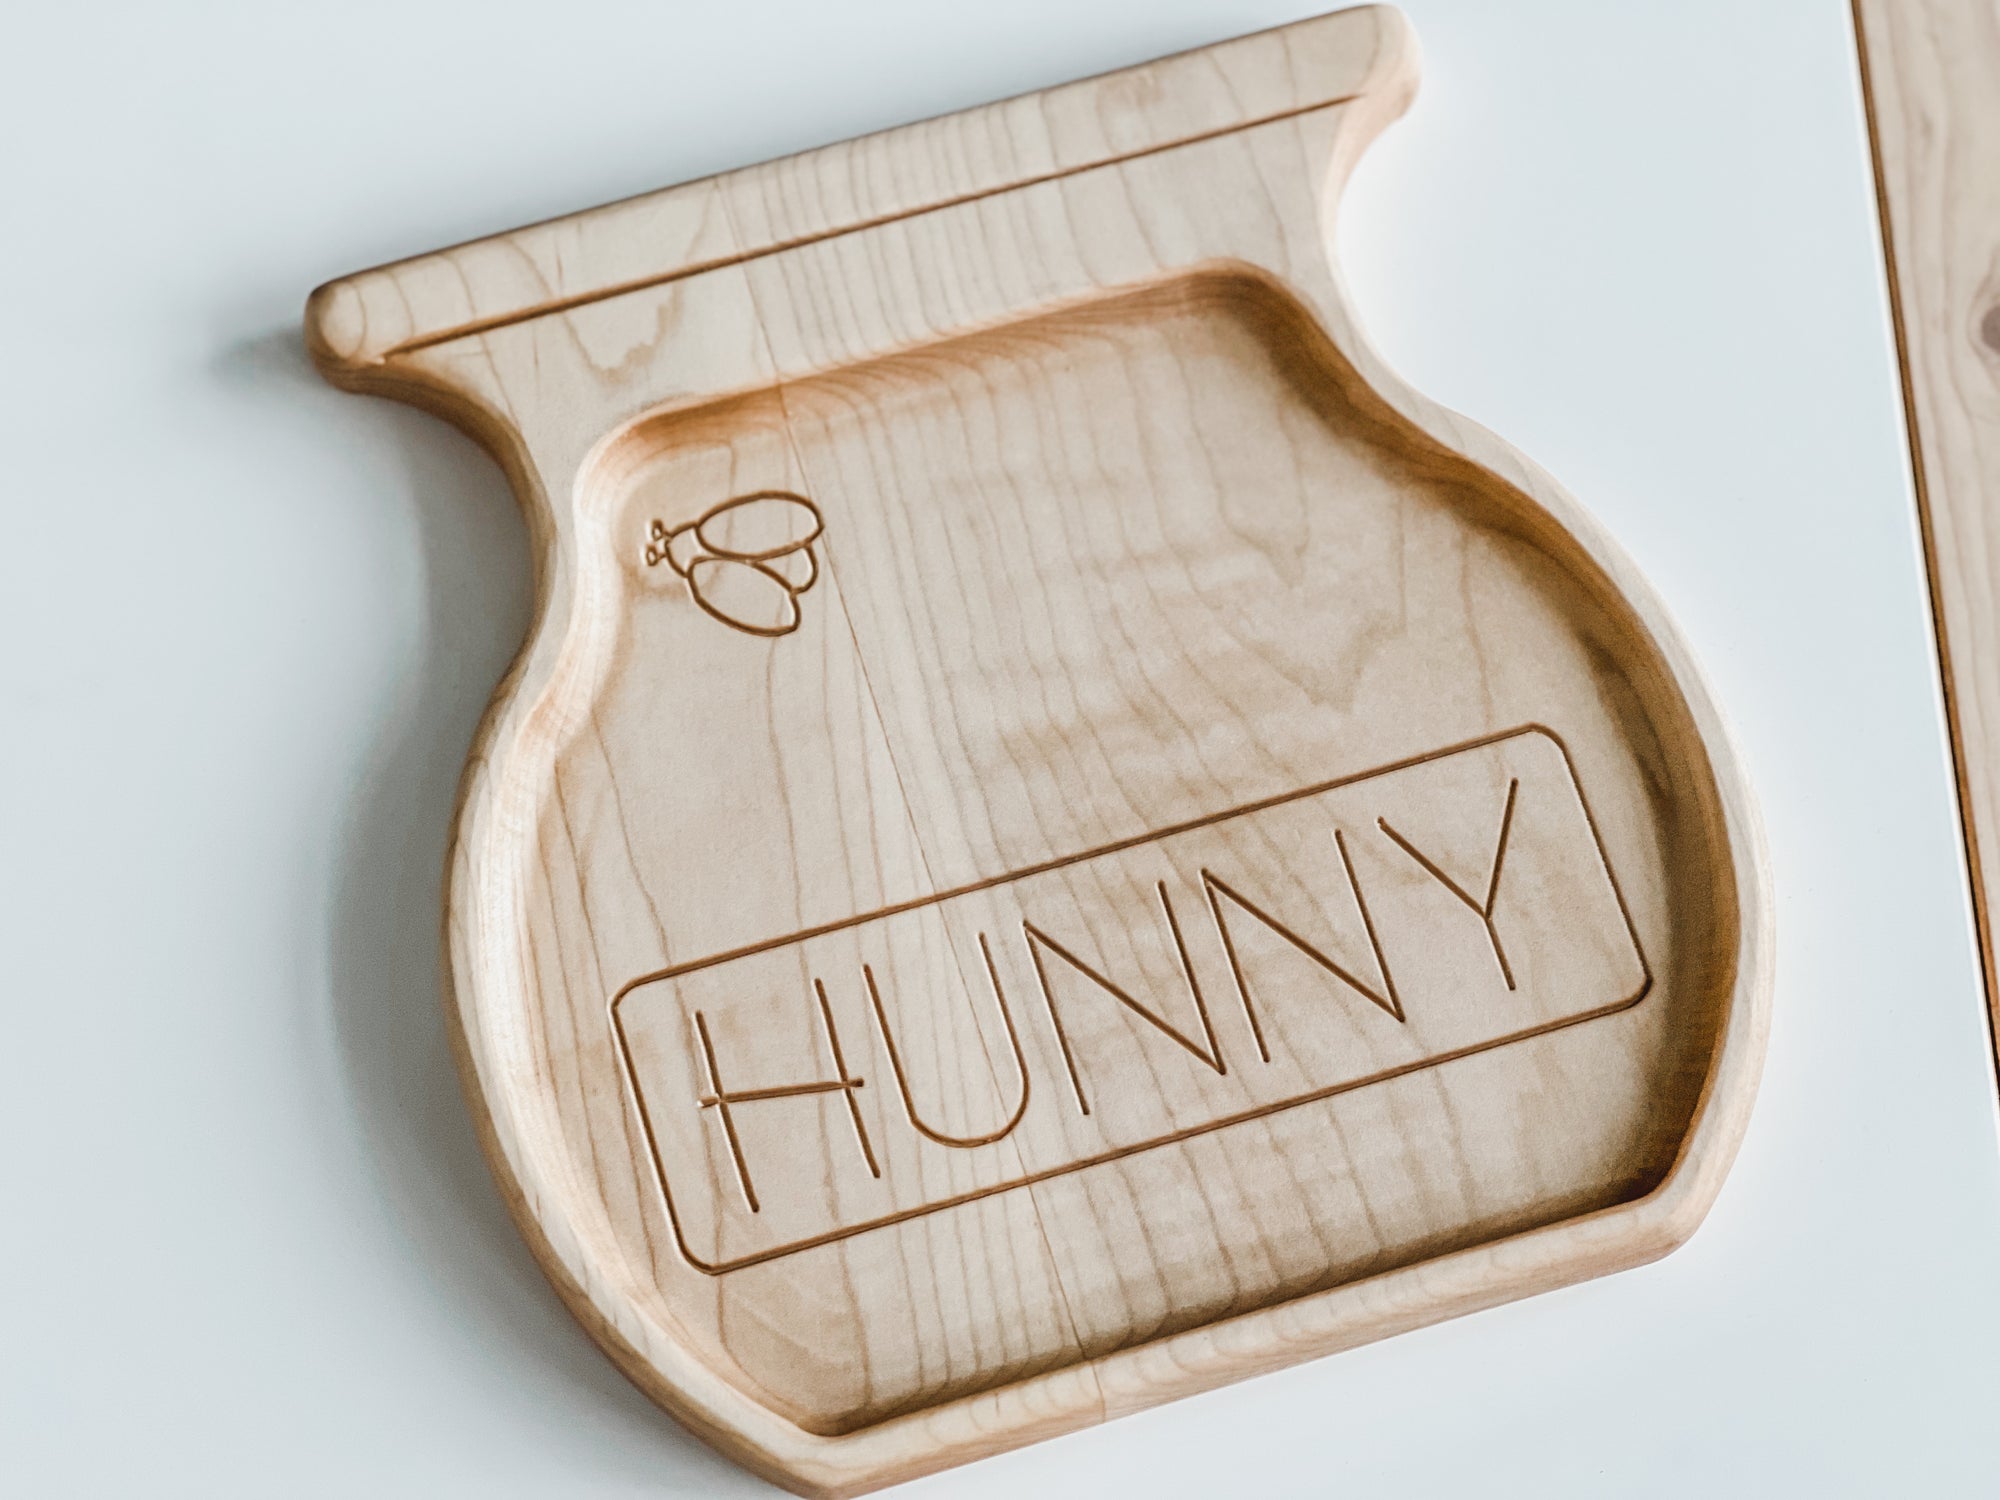 Hunny Pot Tray (Available until 4/14)